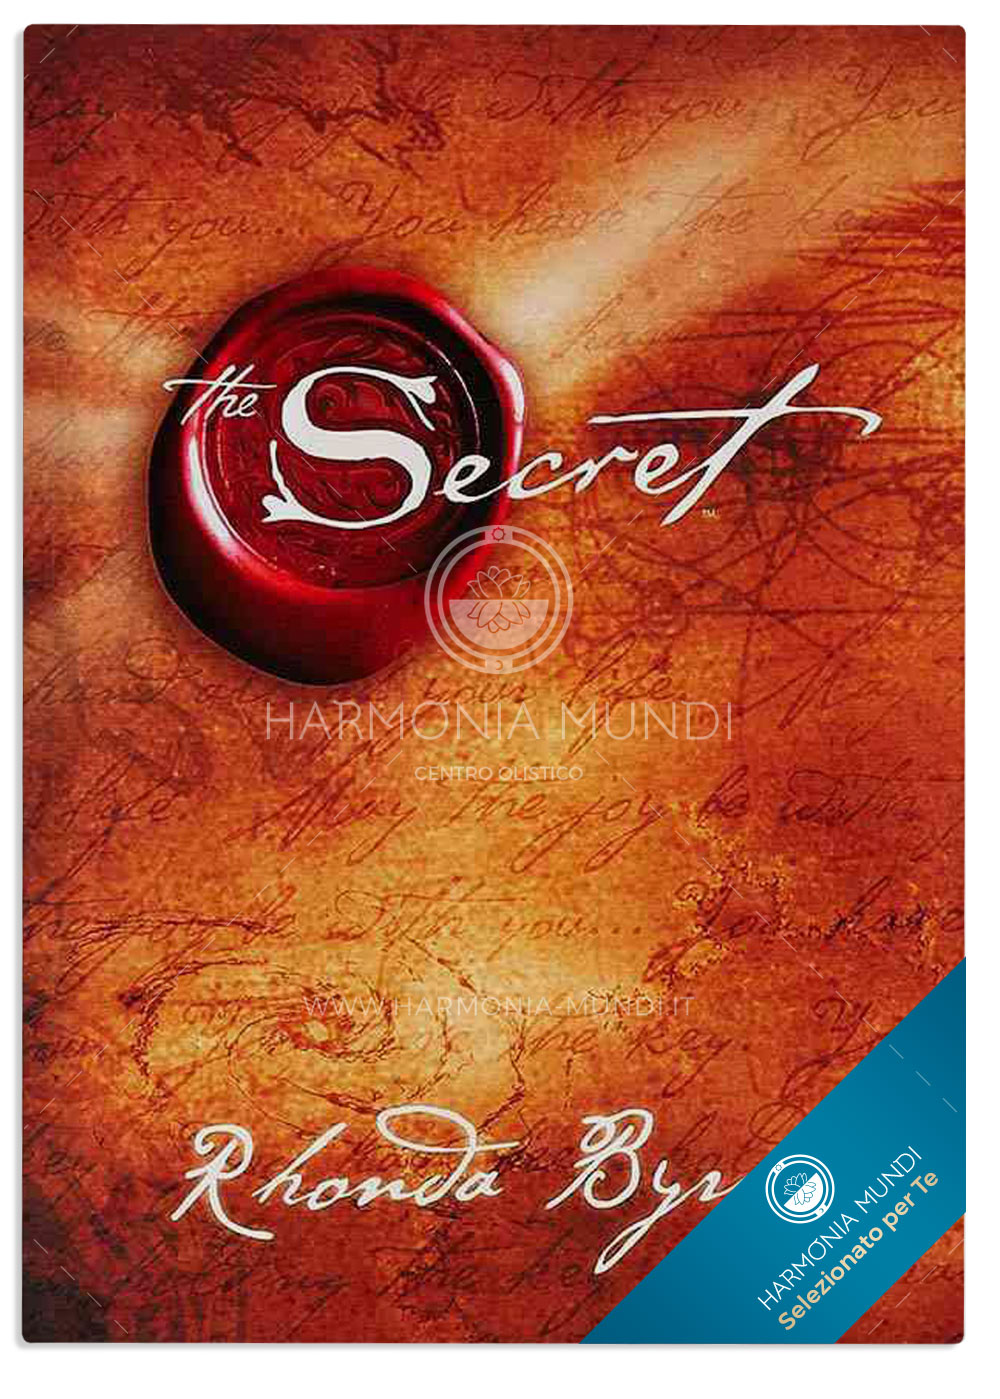 The-Secret-Rhonda-Byrne-MacroEdizioni-Harmonia-Mundi.jpg